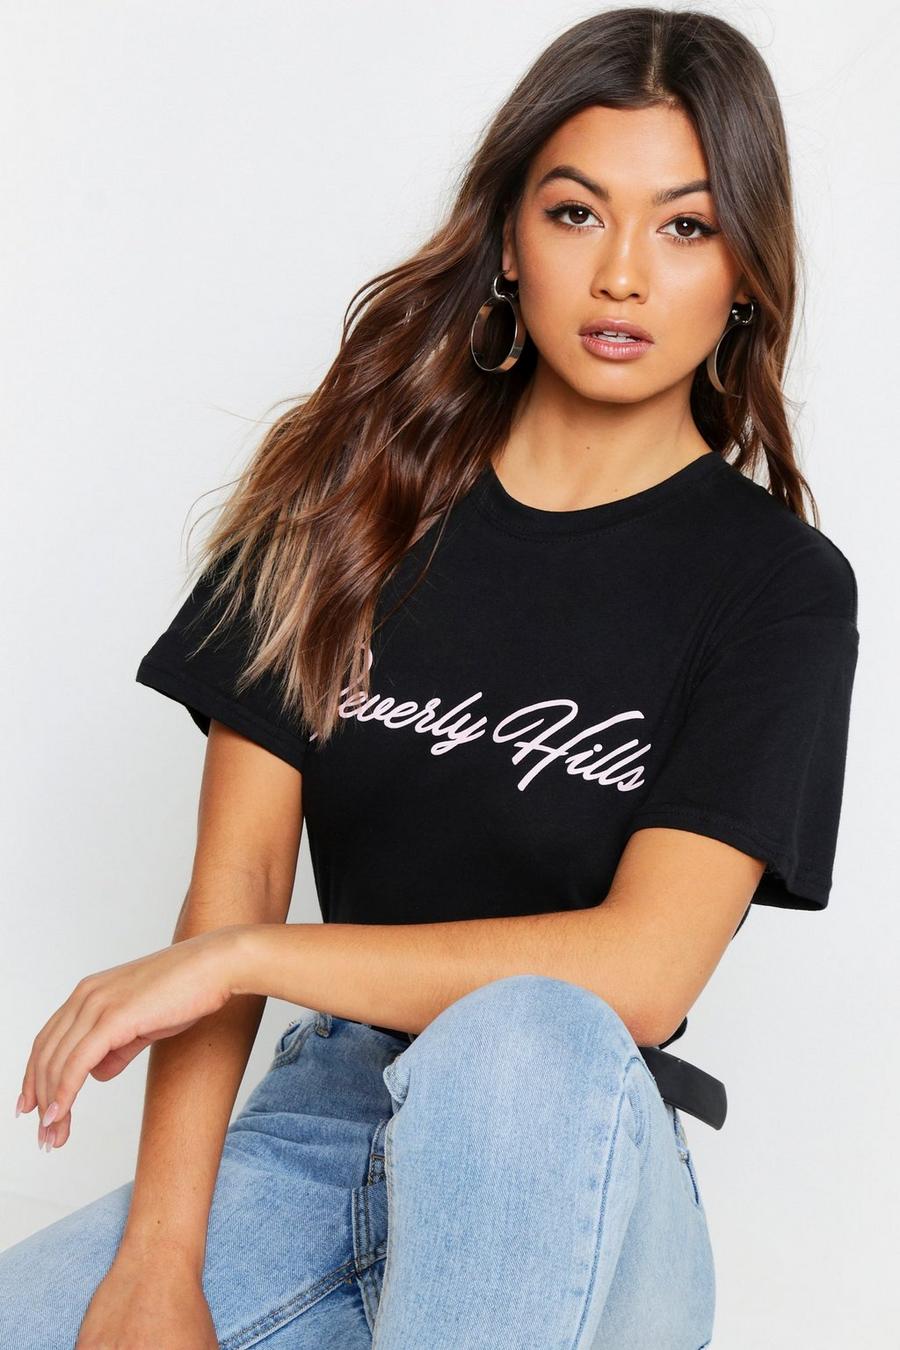 Camiseta con eslogan "Beverly Hills" en tonos pastel image number 1